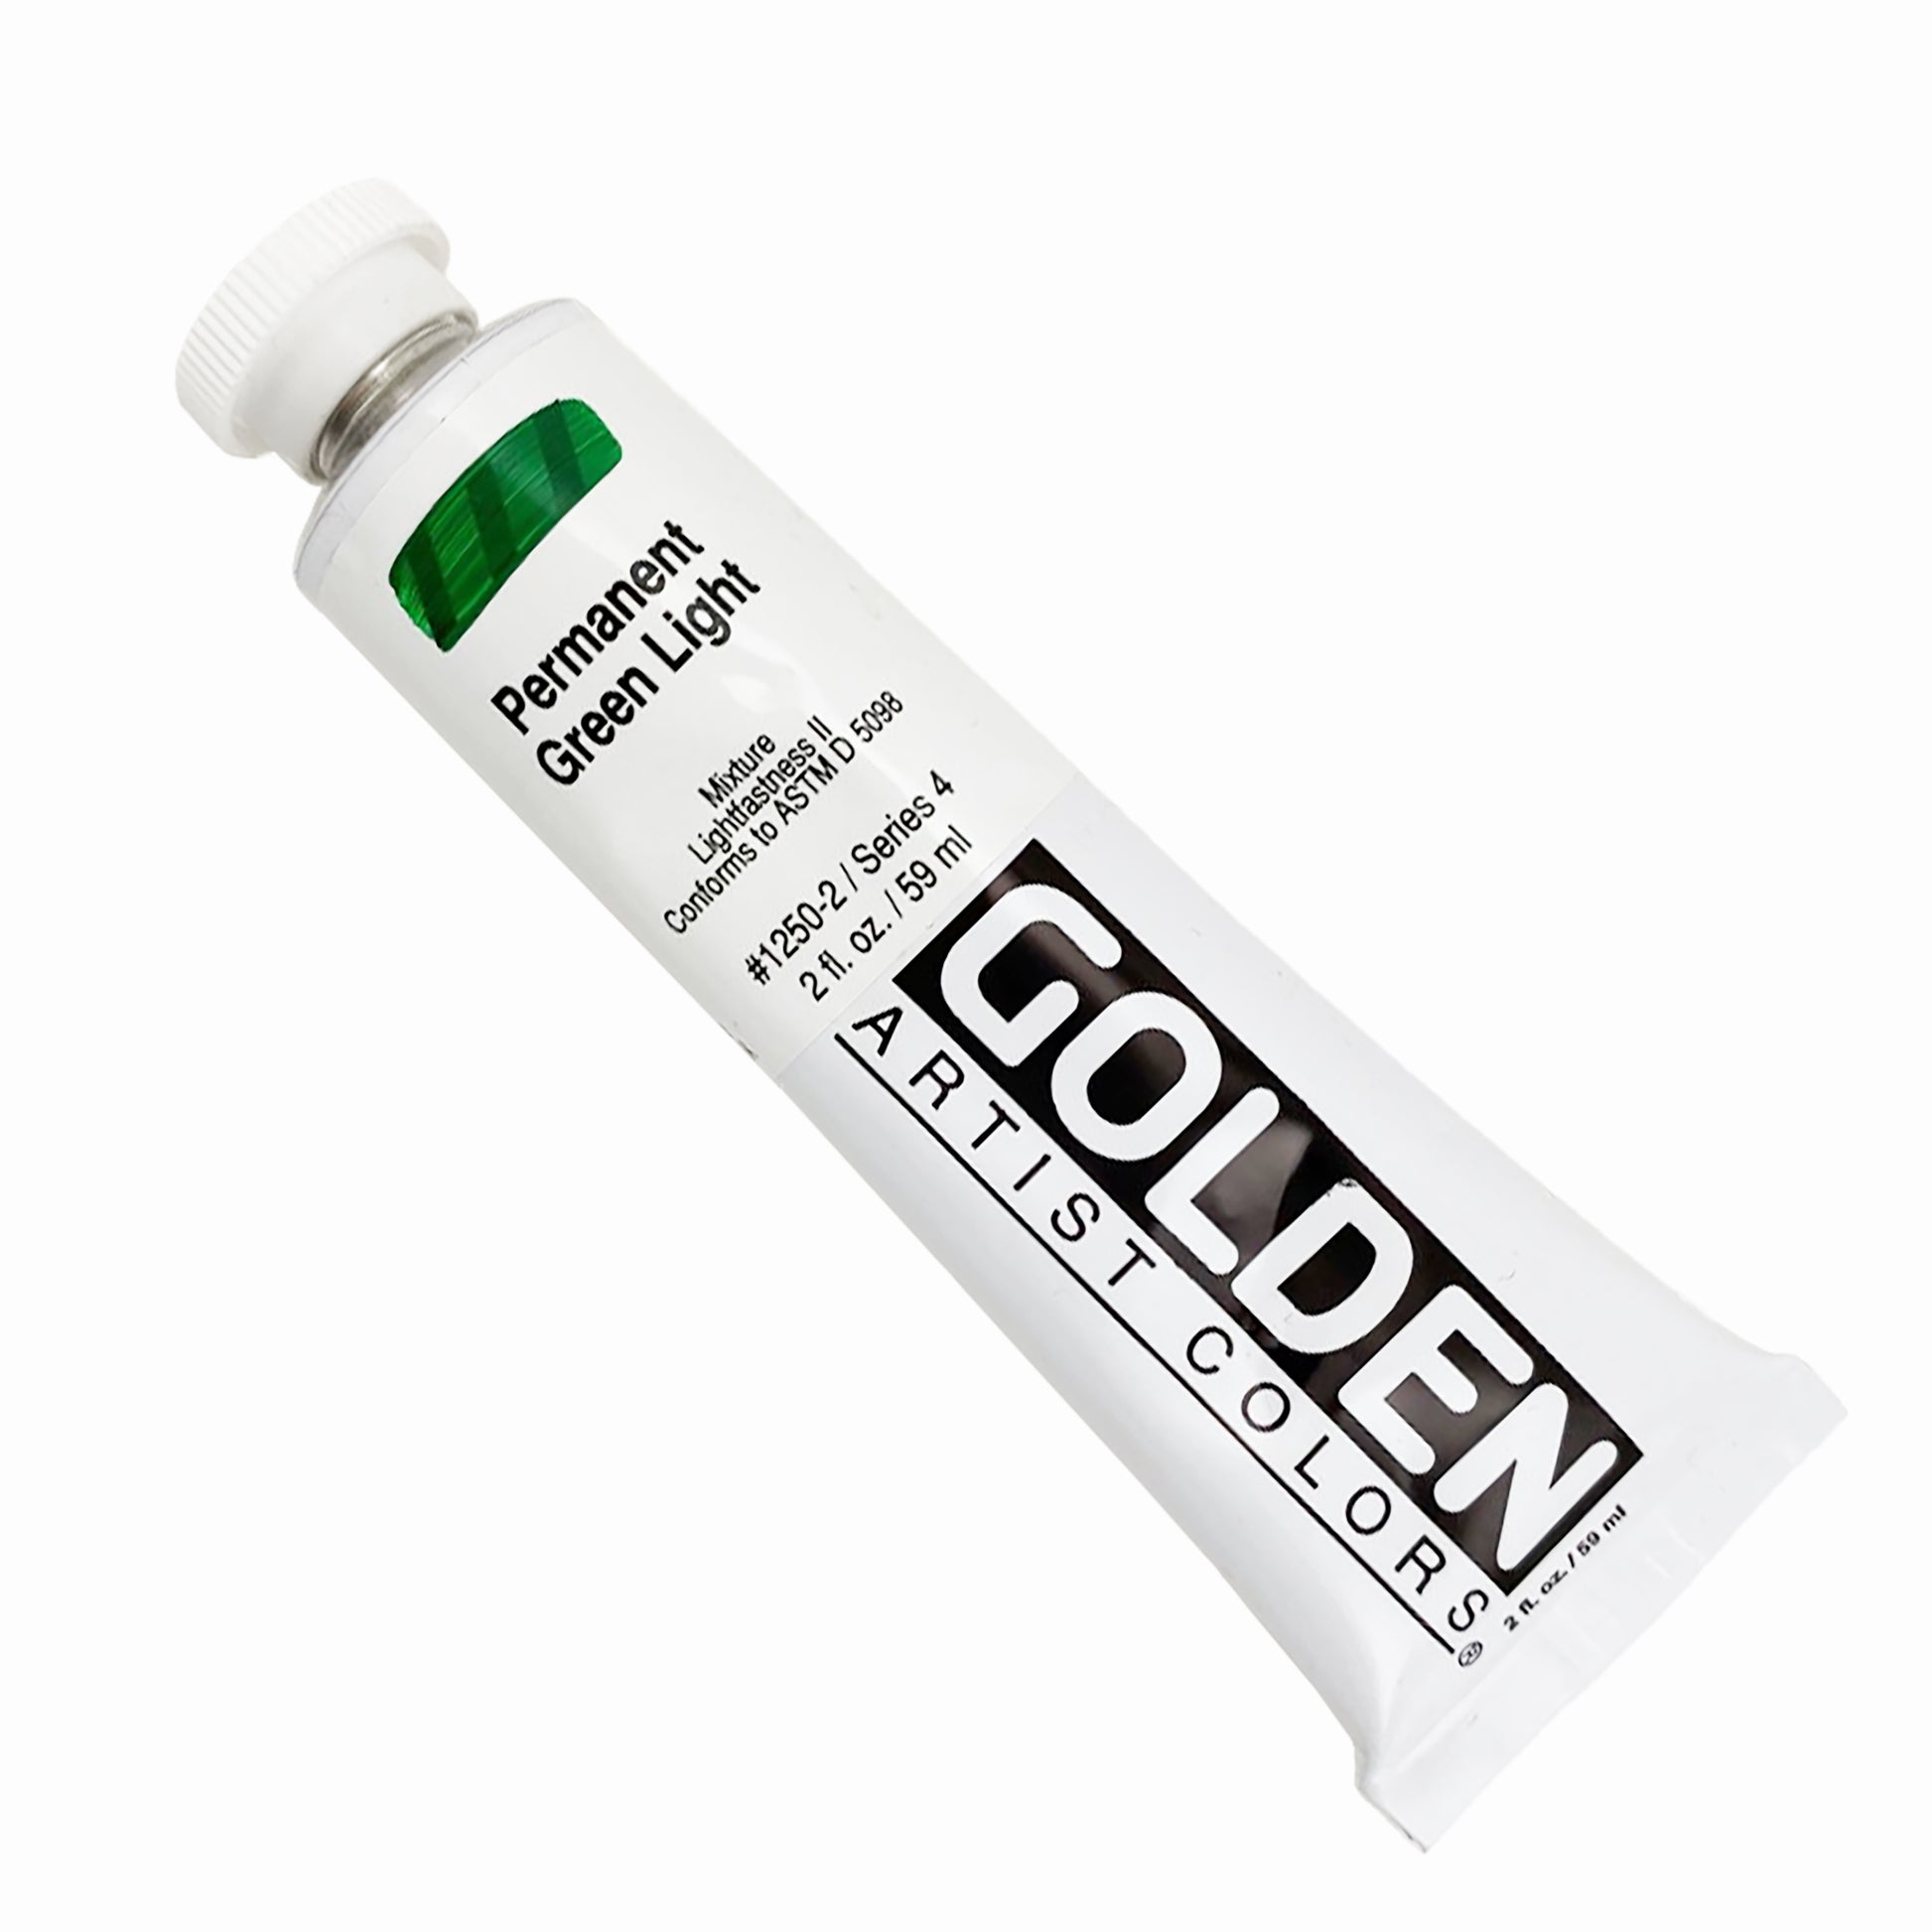 Golden Heavy Body Acrylic - Light Phthalo Green 2 oz.